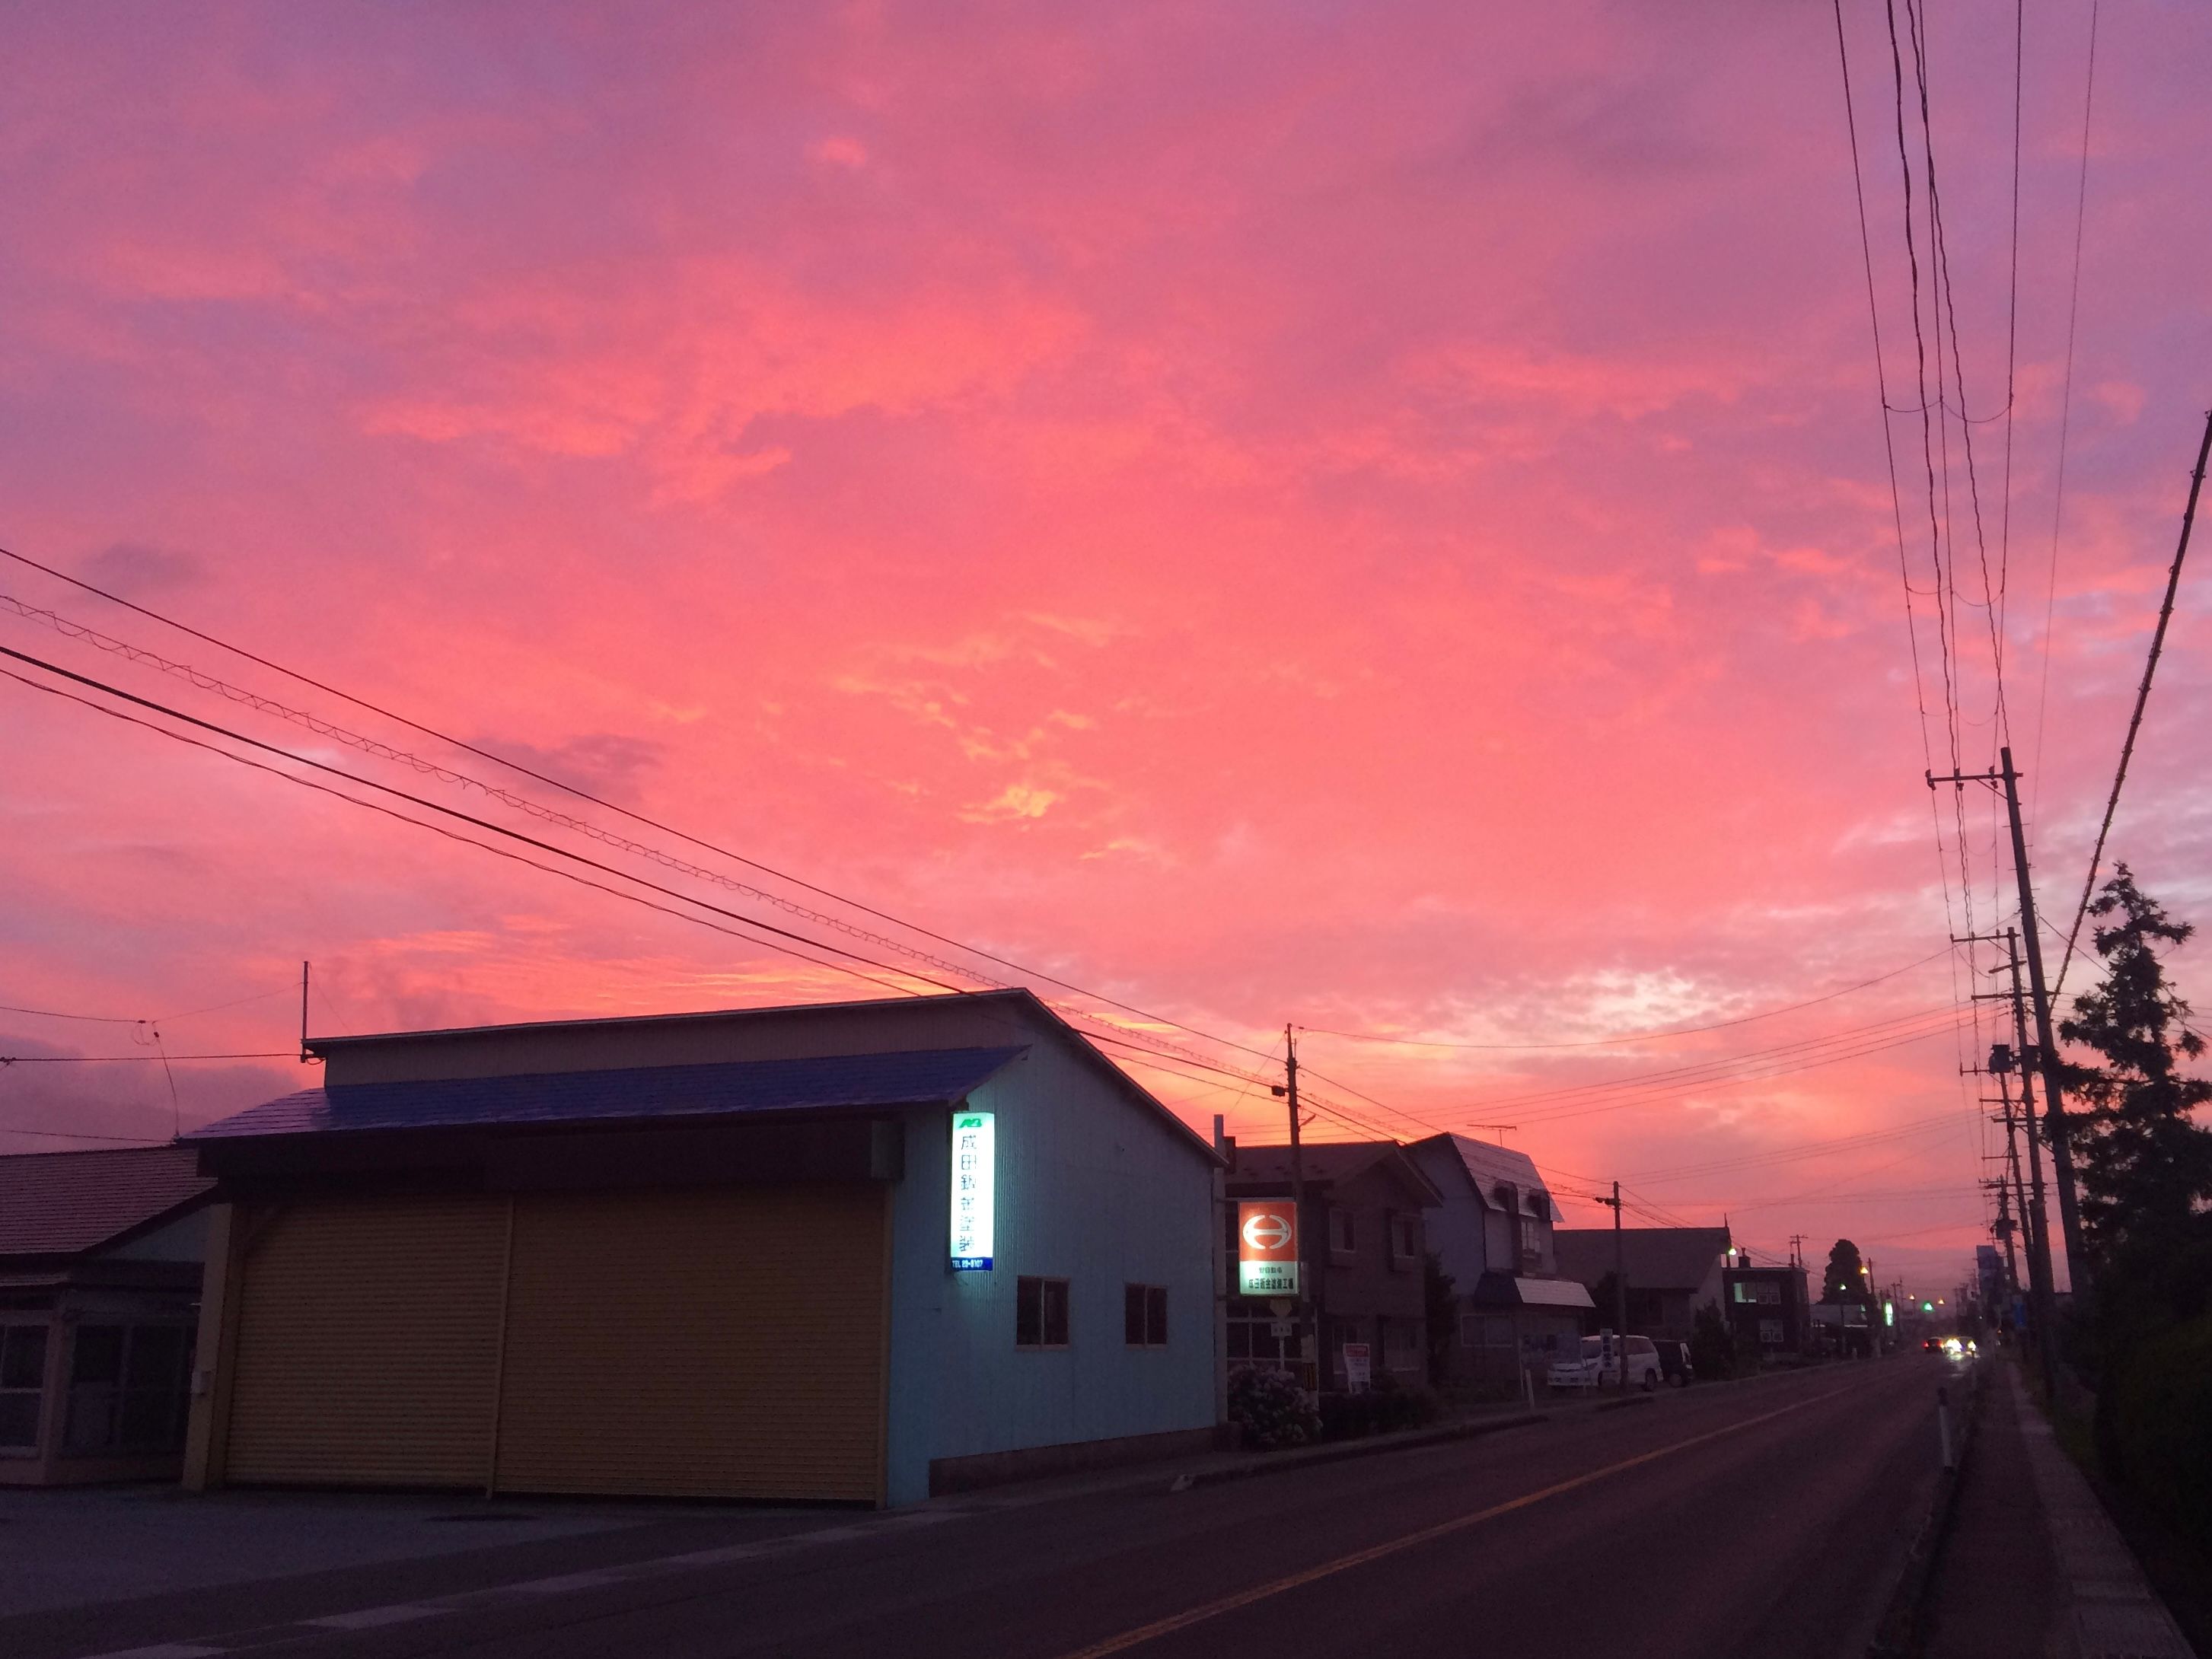 A radiant pink-orange sunset above a street.